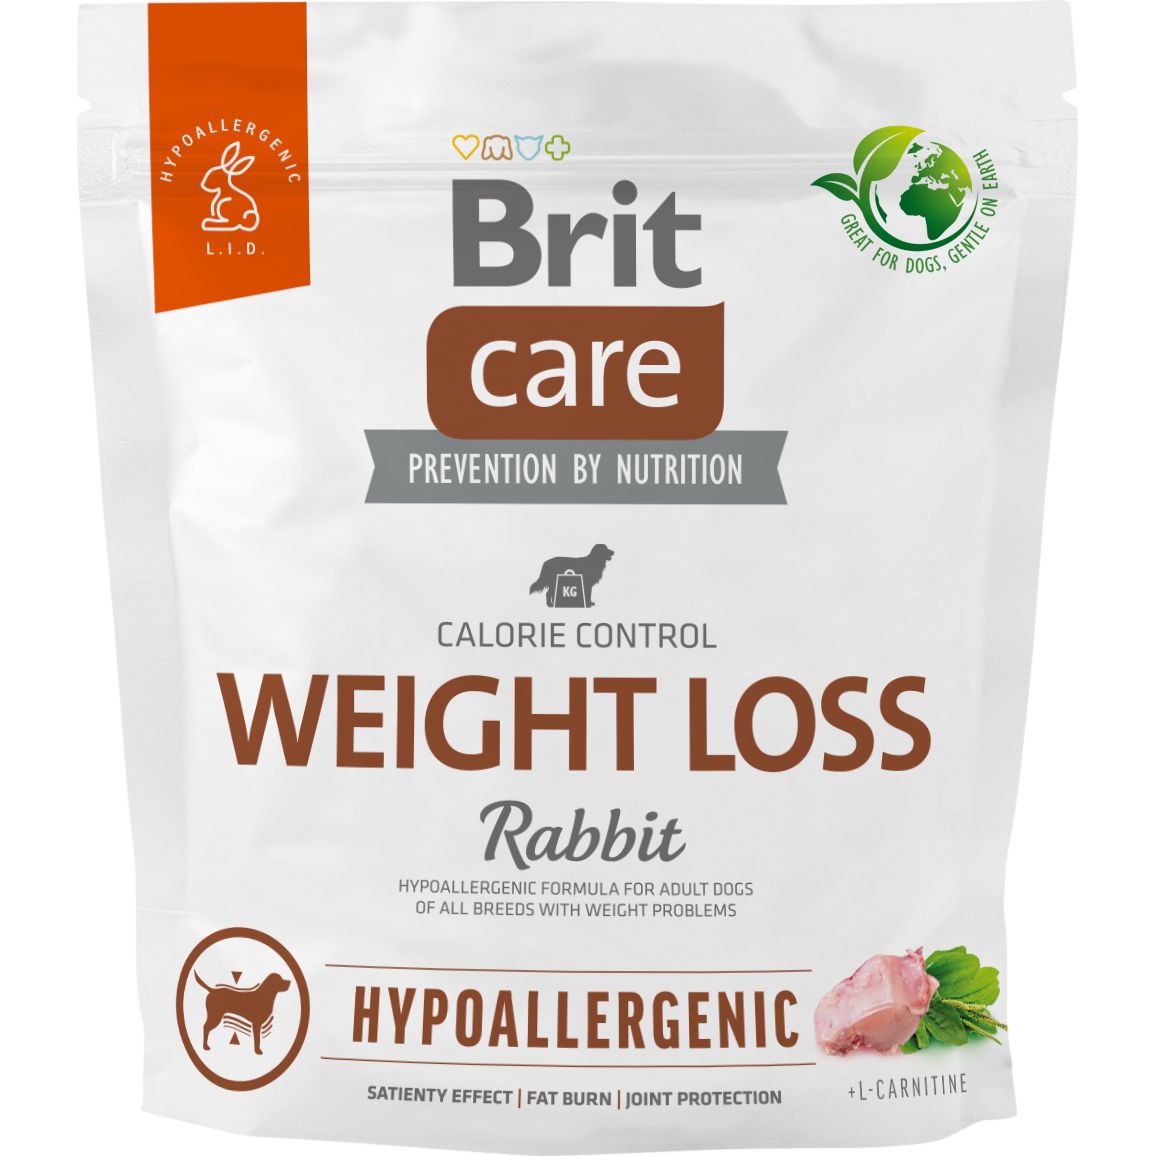 Сухий корм для собак із зайвою вагою Brit Care Dog Hypoallergenic Weight Loss, гіпоалергенний, з кроликом, 1 кг - фото 1